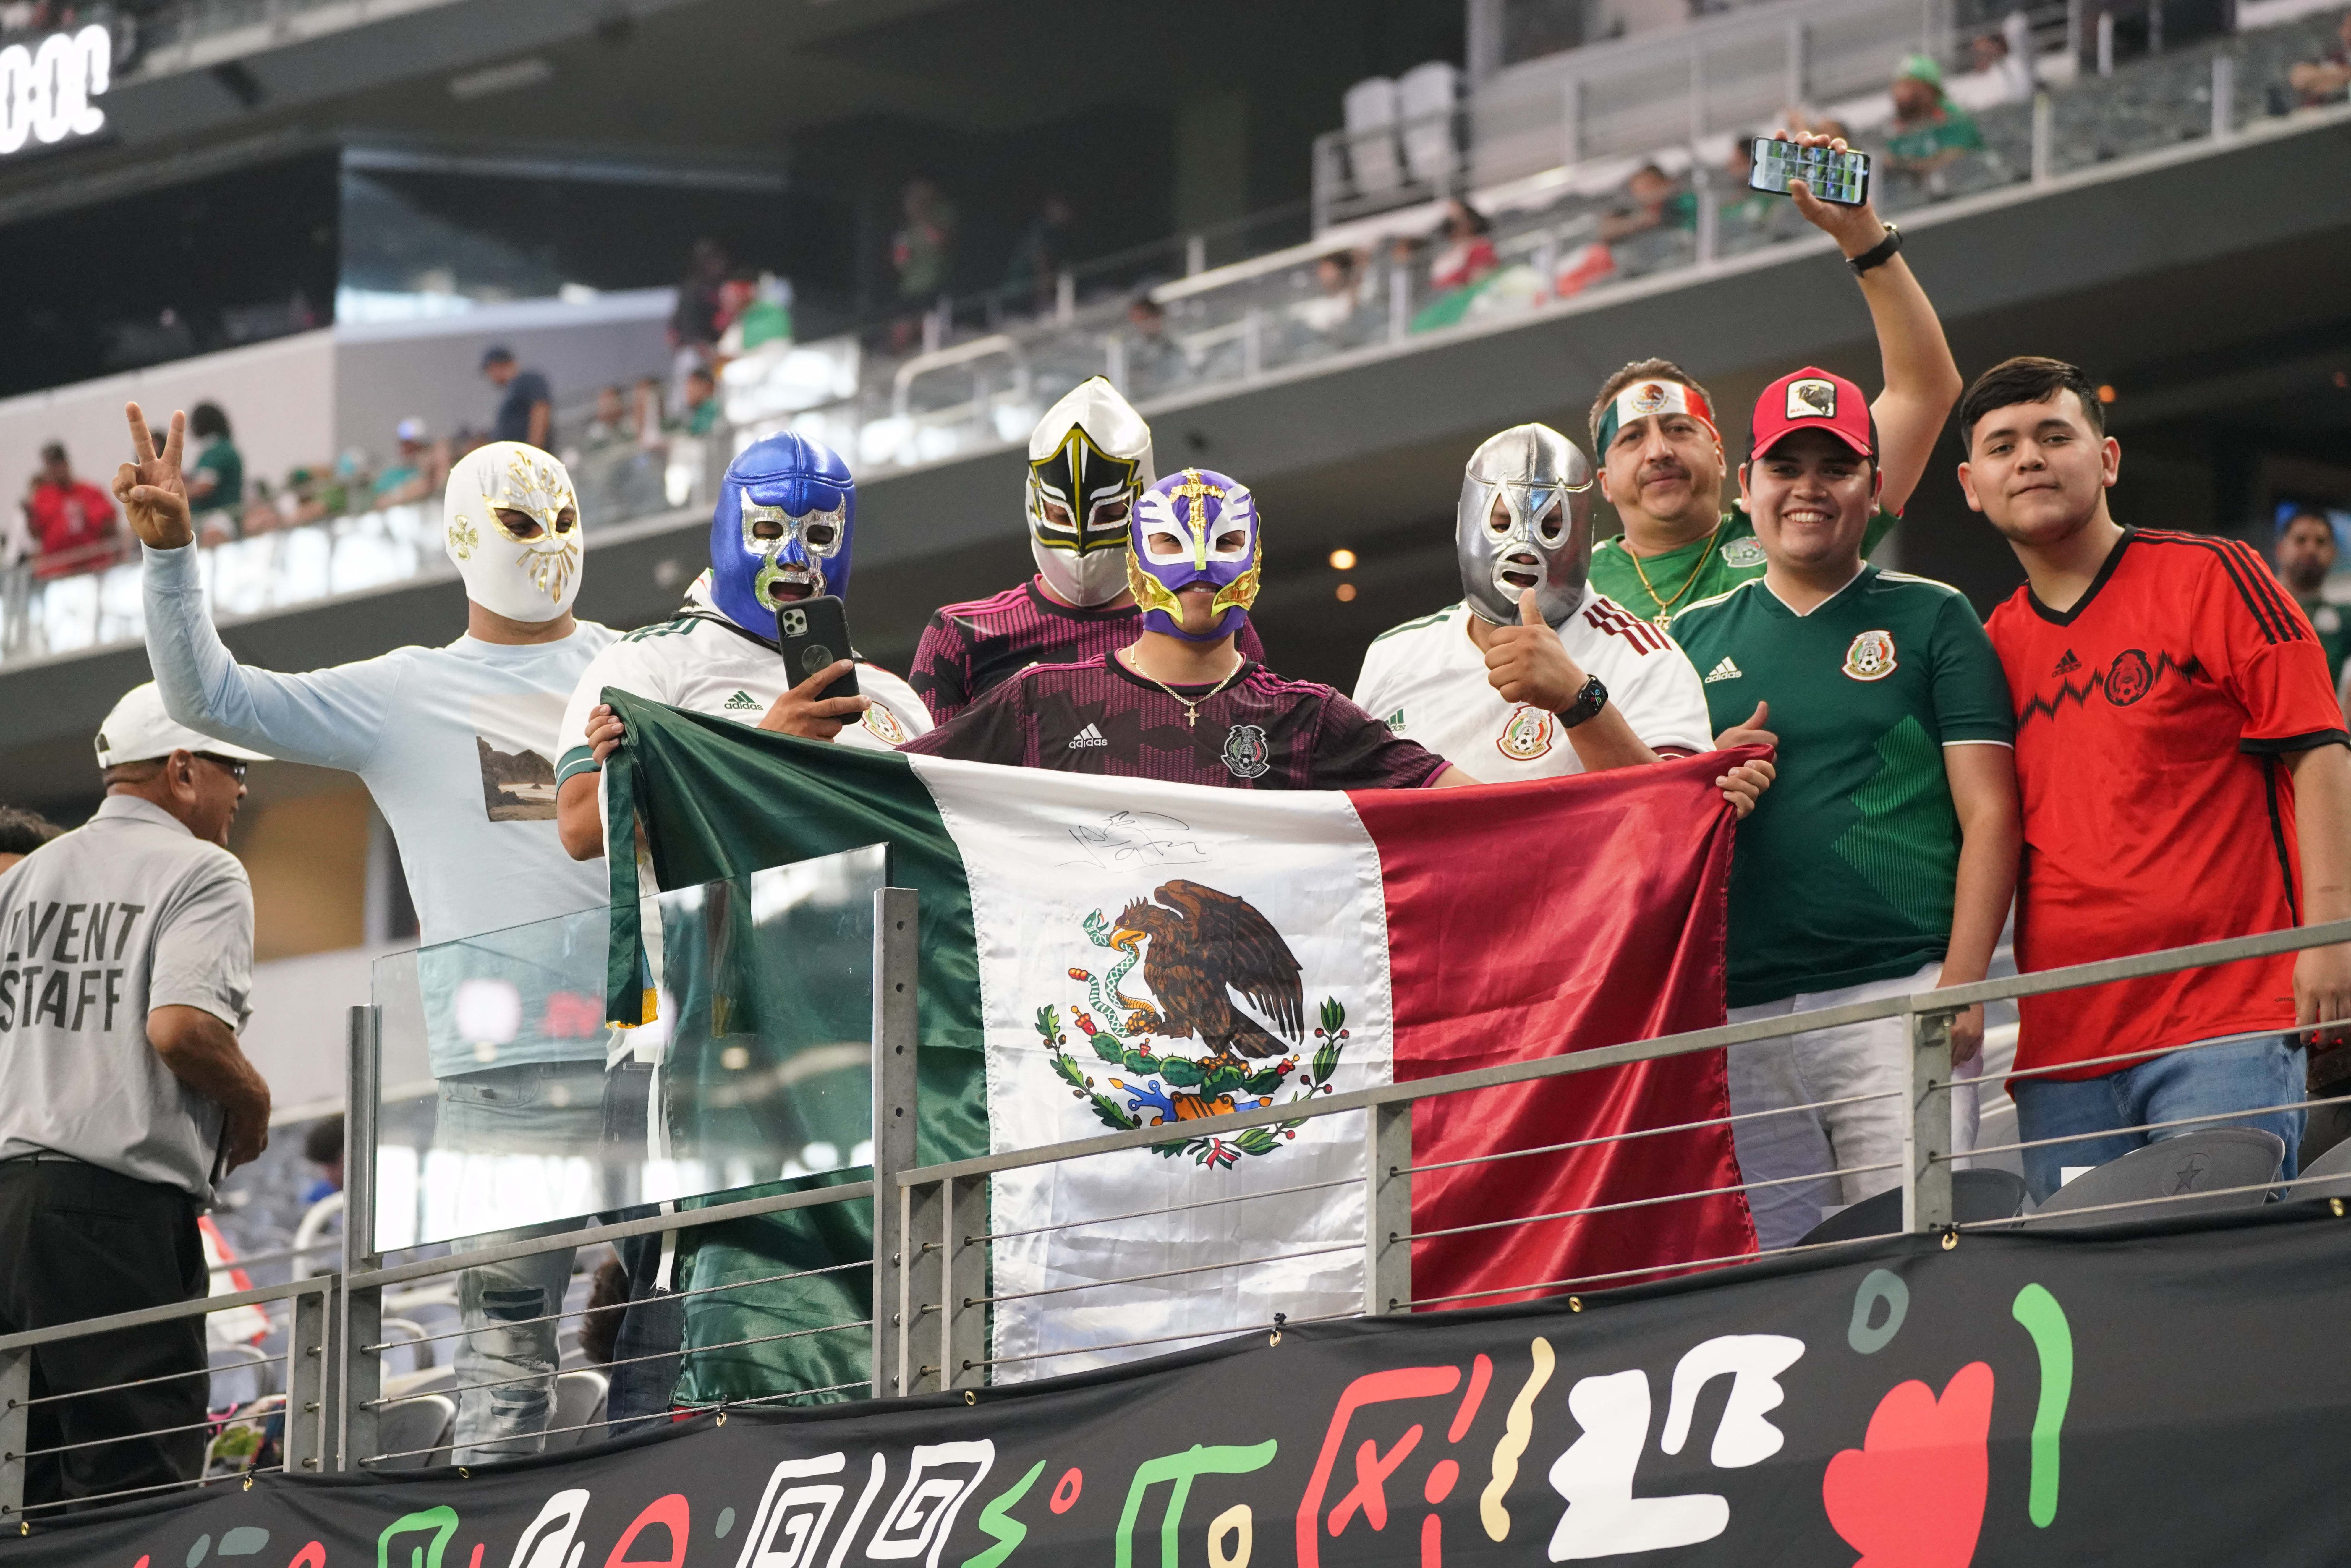 May 28, 2022; Arlington, TX, USA; Fans cheer at an international friendly match featuring Mexico and Nigeria at AT&T Stadium. Mandatory Credit: Chris Jones-USA TODAY Sports